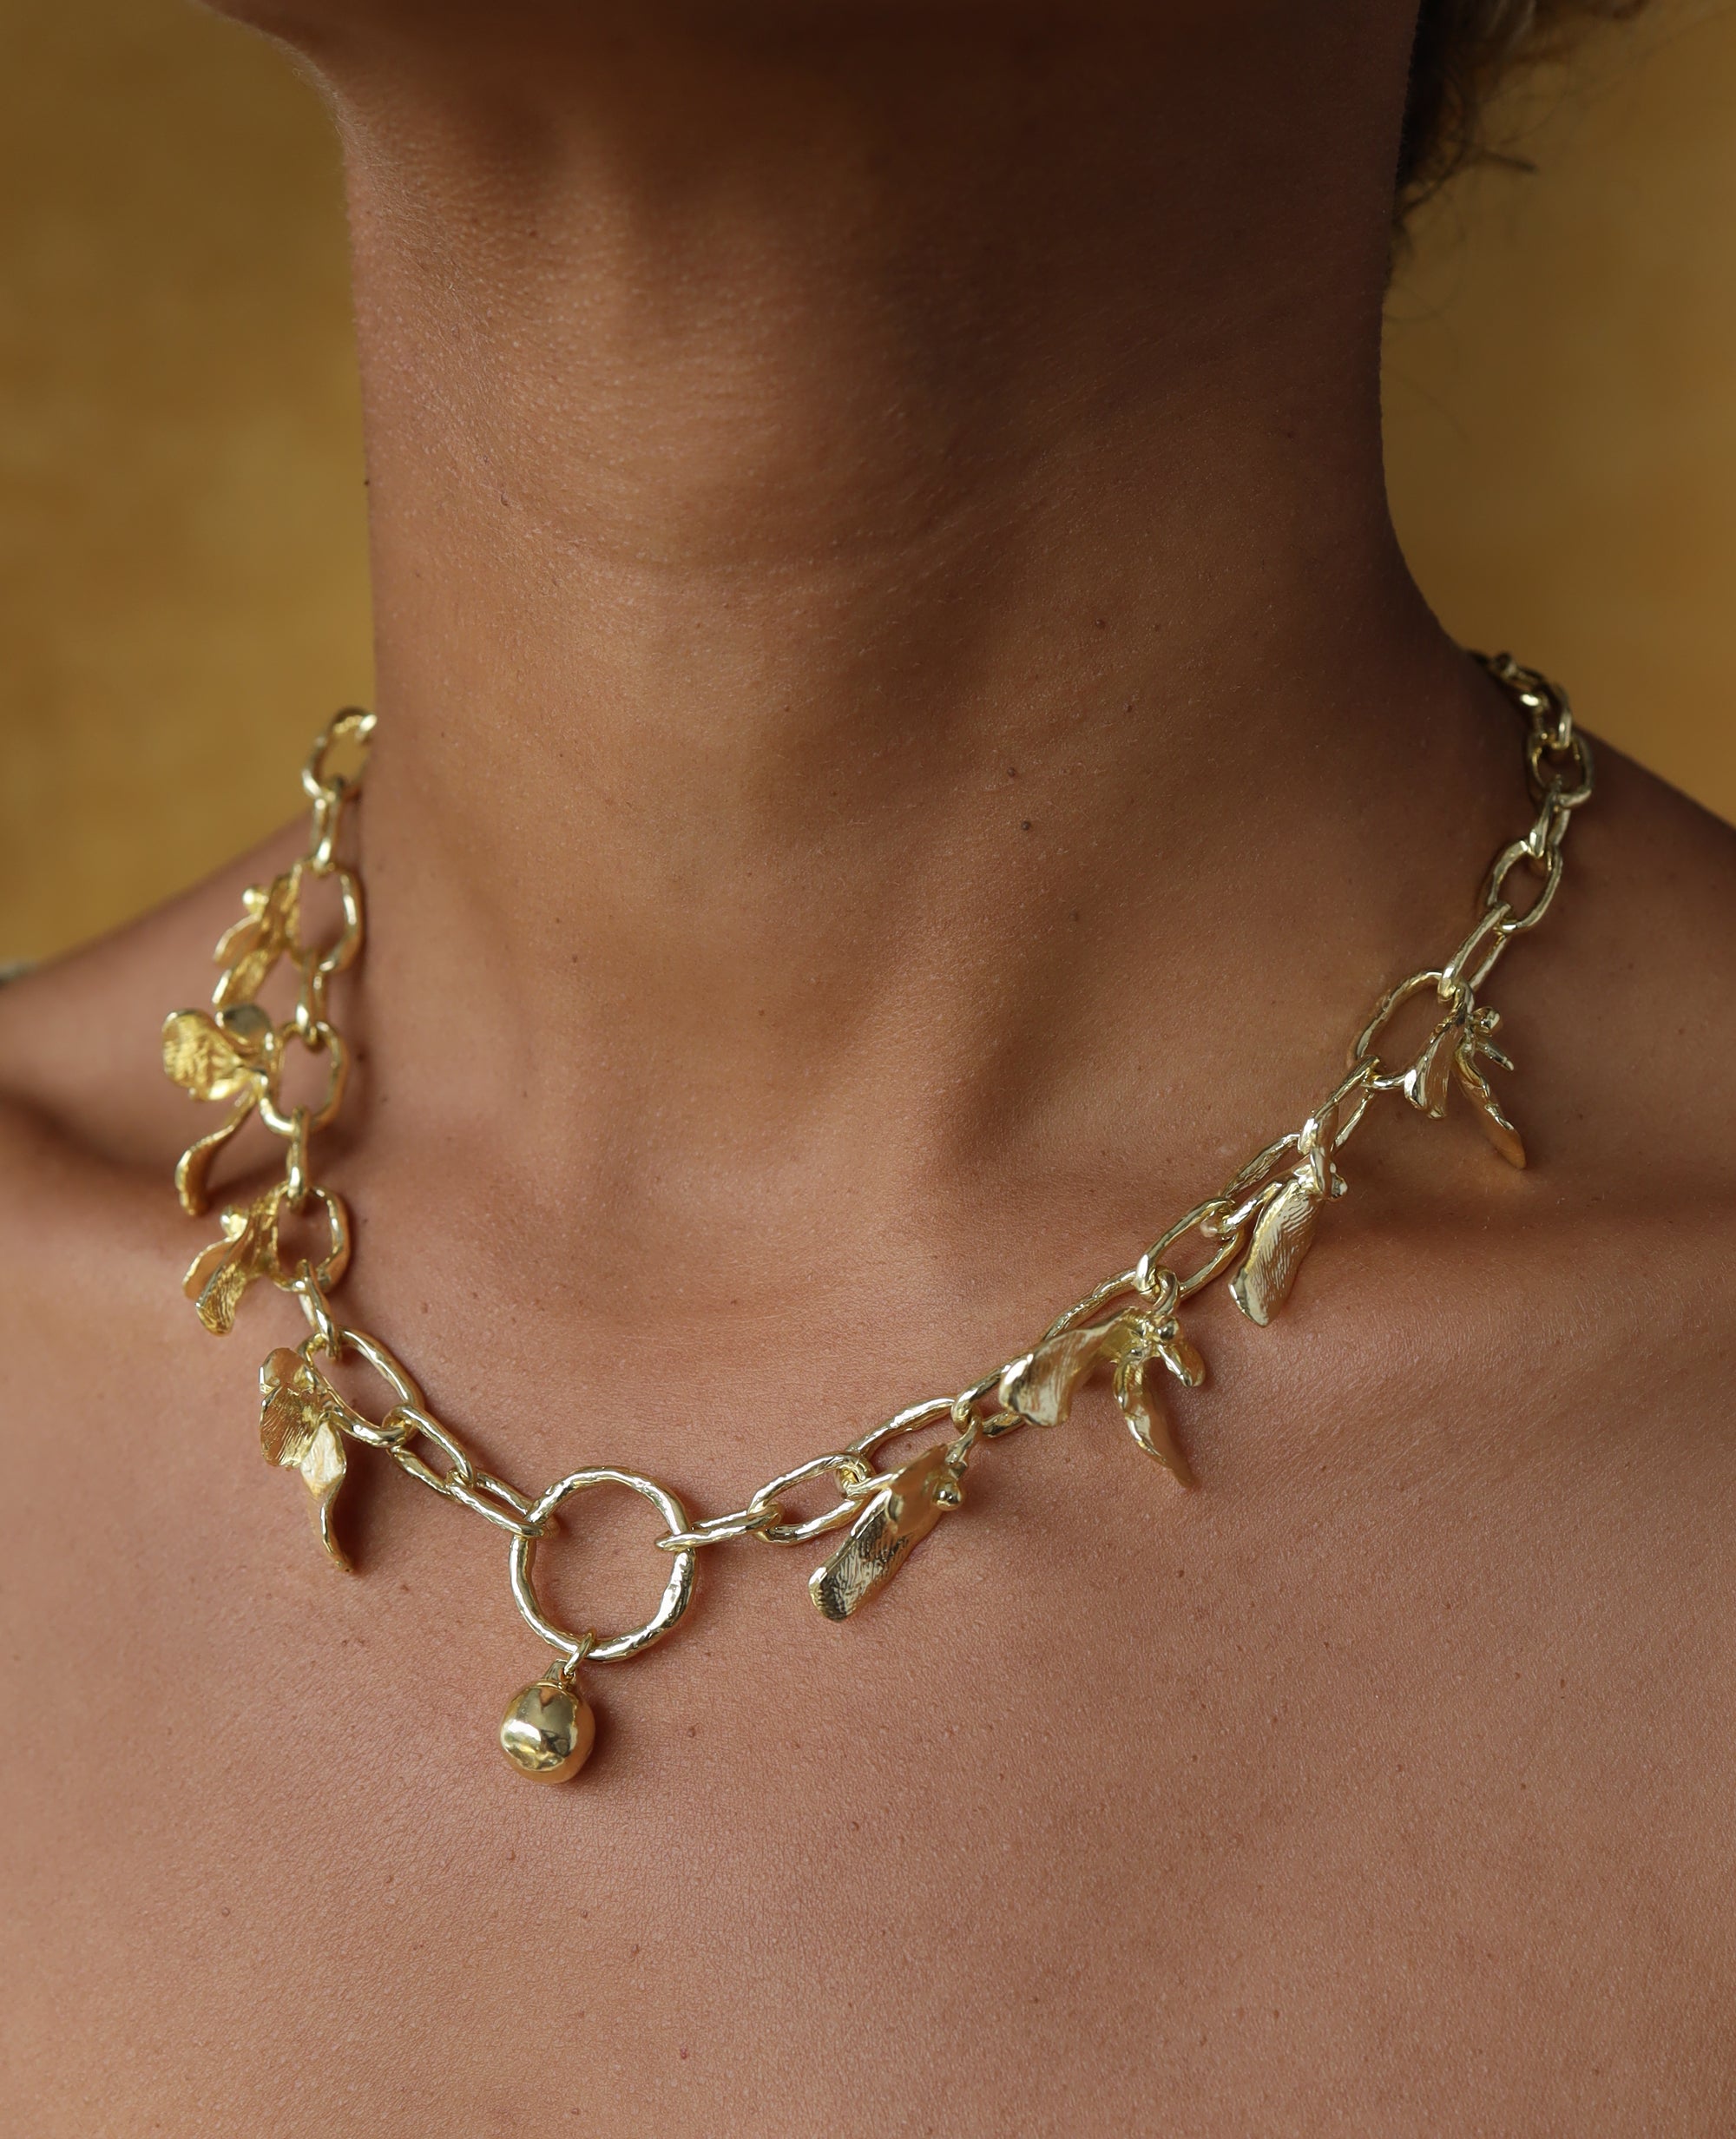 FLORALIS COLLAR // golden necklace - ORA-C jewelry - handmade jewelry by Montreal based independent designer Caroline Pham